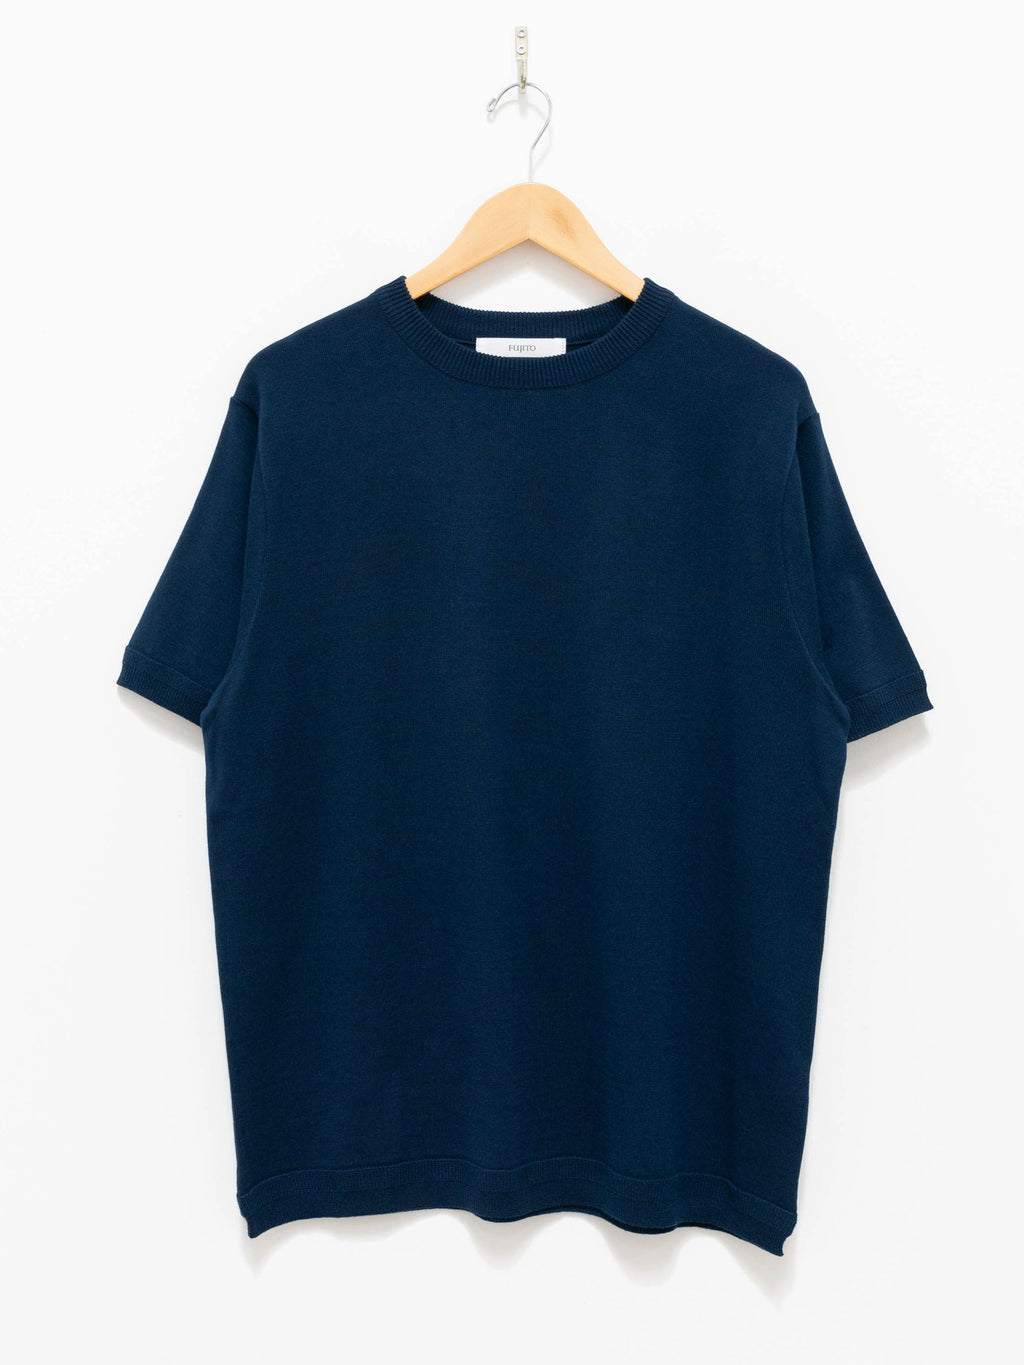 Namu Shop - Fujito Knit T-Shirt - Navy